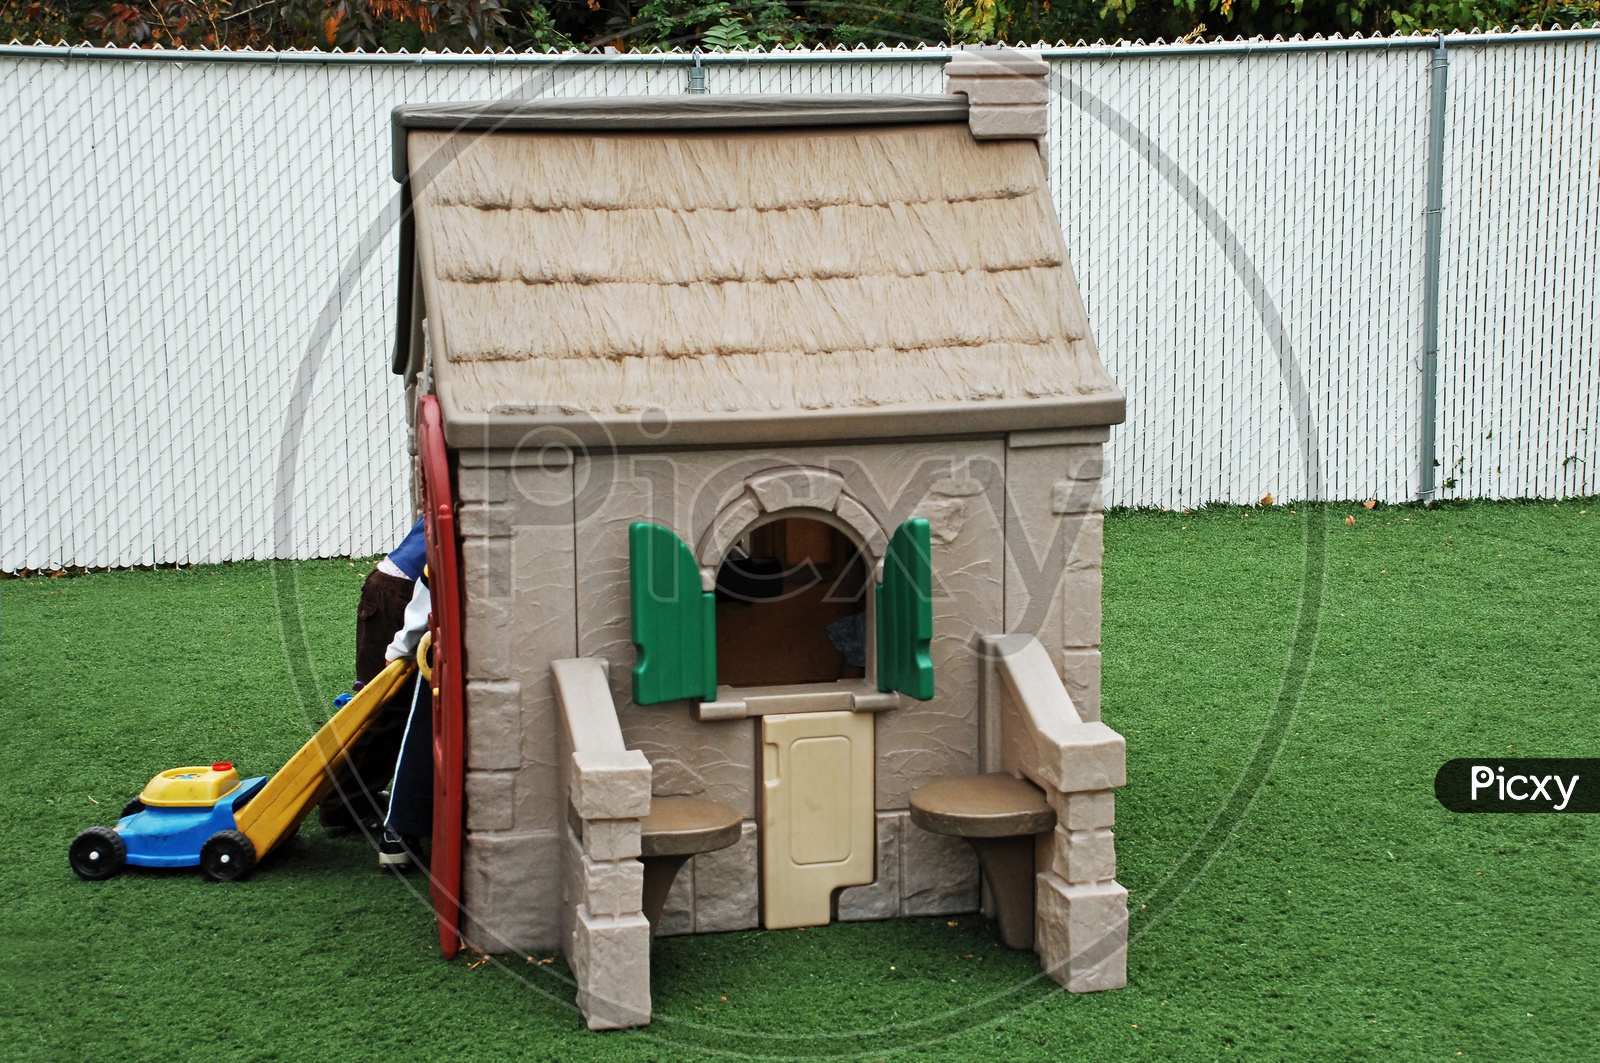 House  In a Kinder Garden School